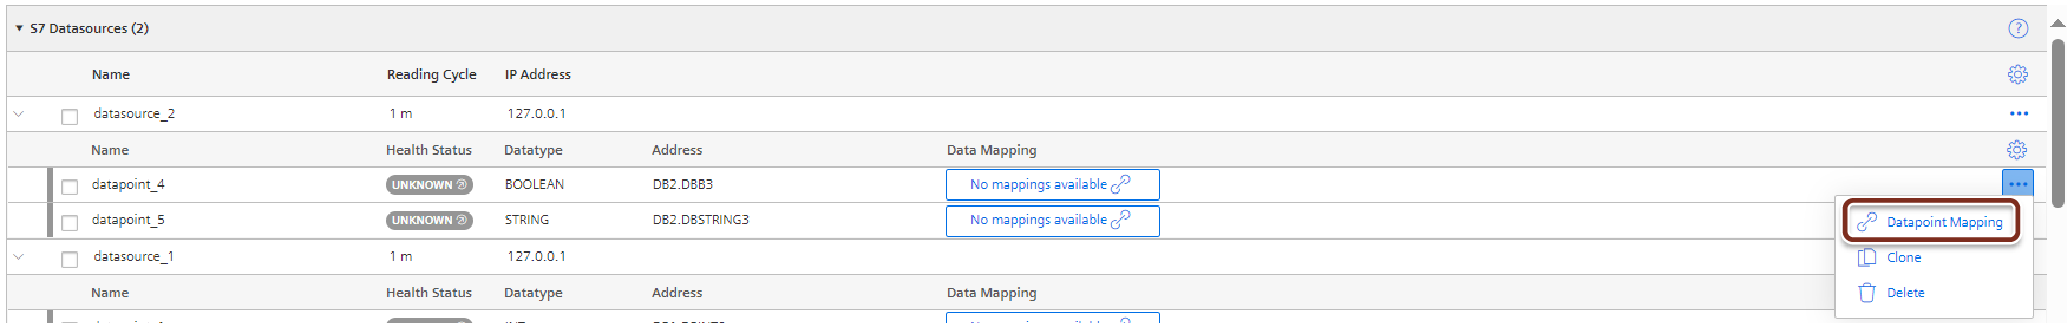 Data Mapping option